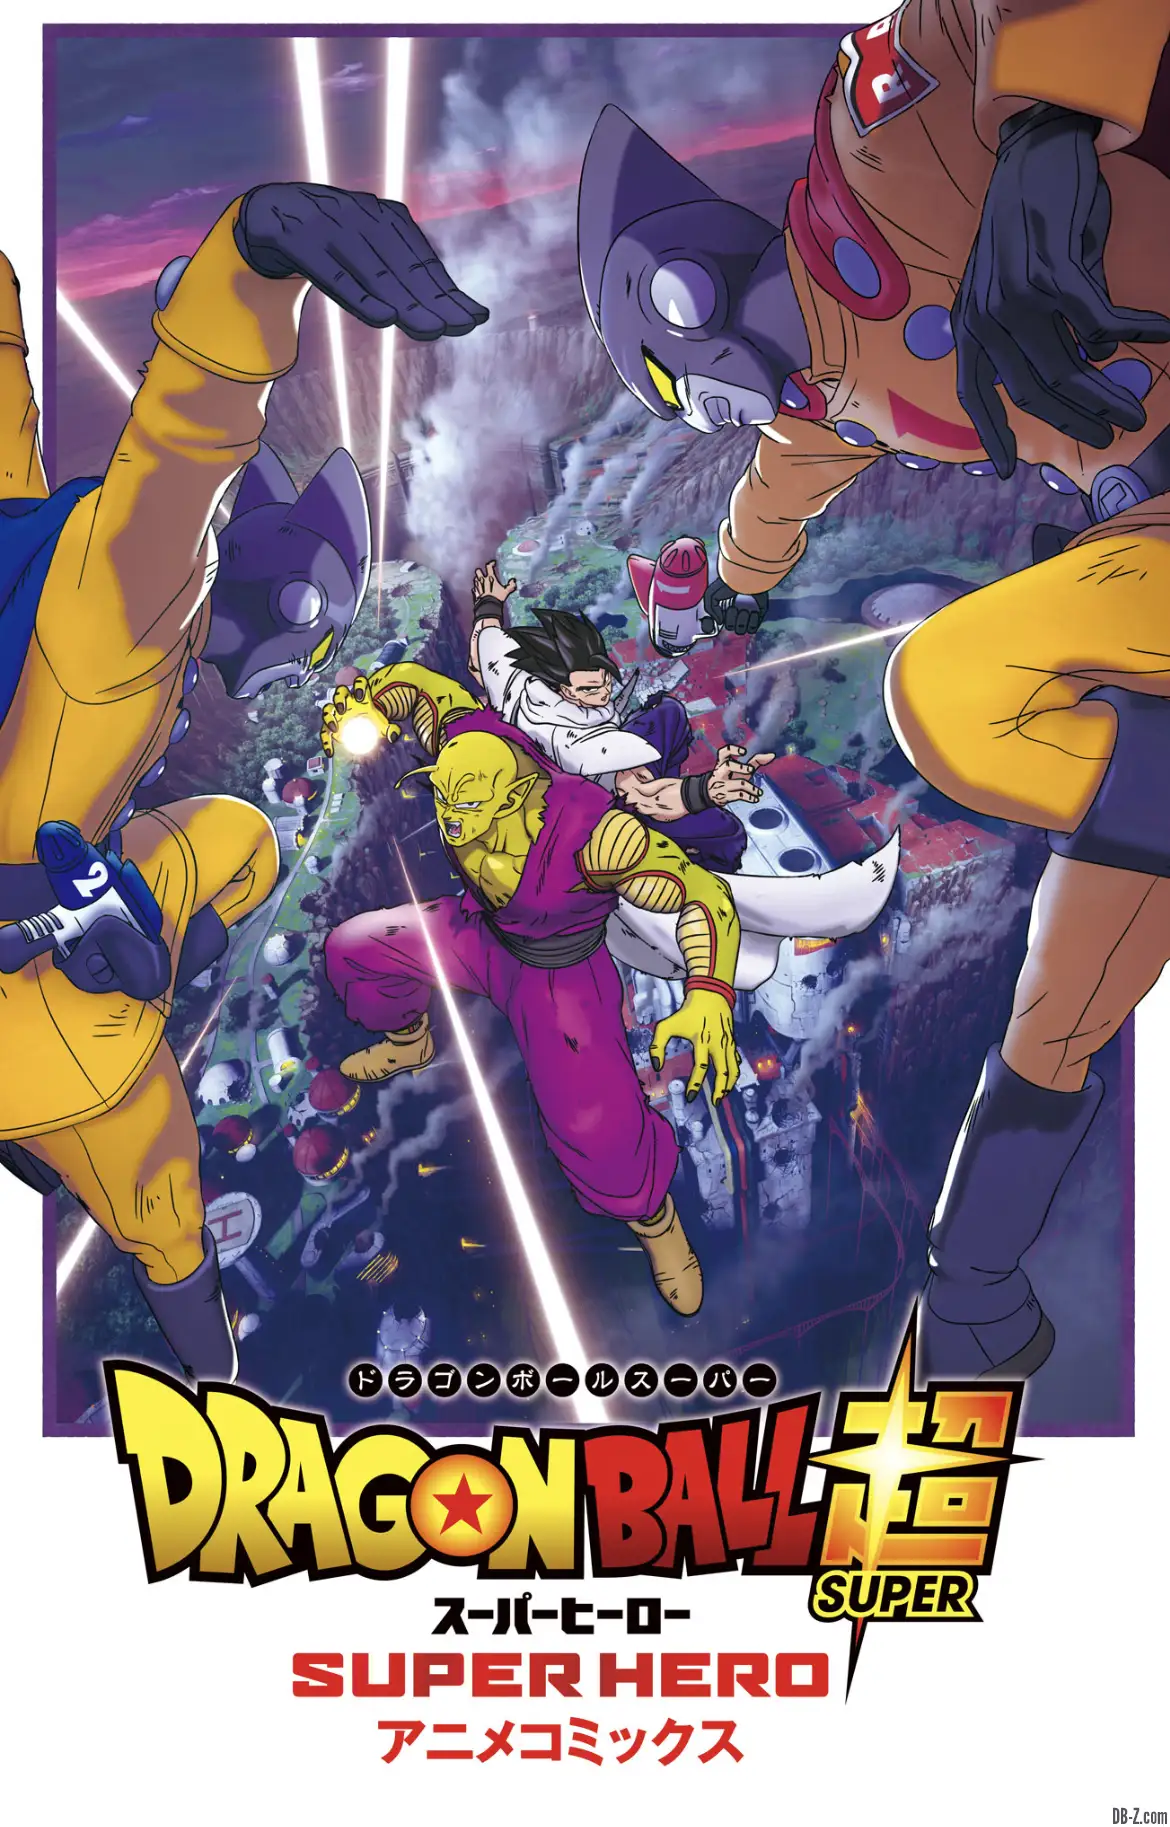 Extrait gratuit de l'Anime Comics Dragon Ball Super SUPER HERO